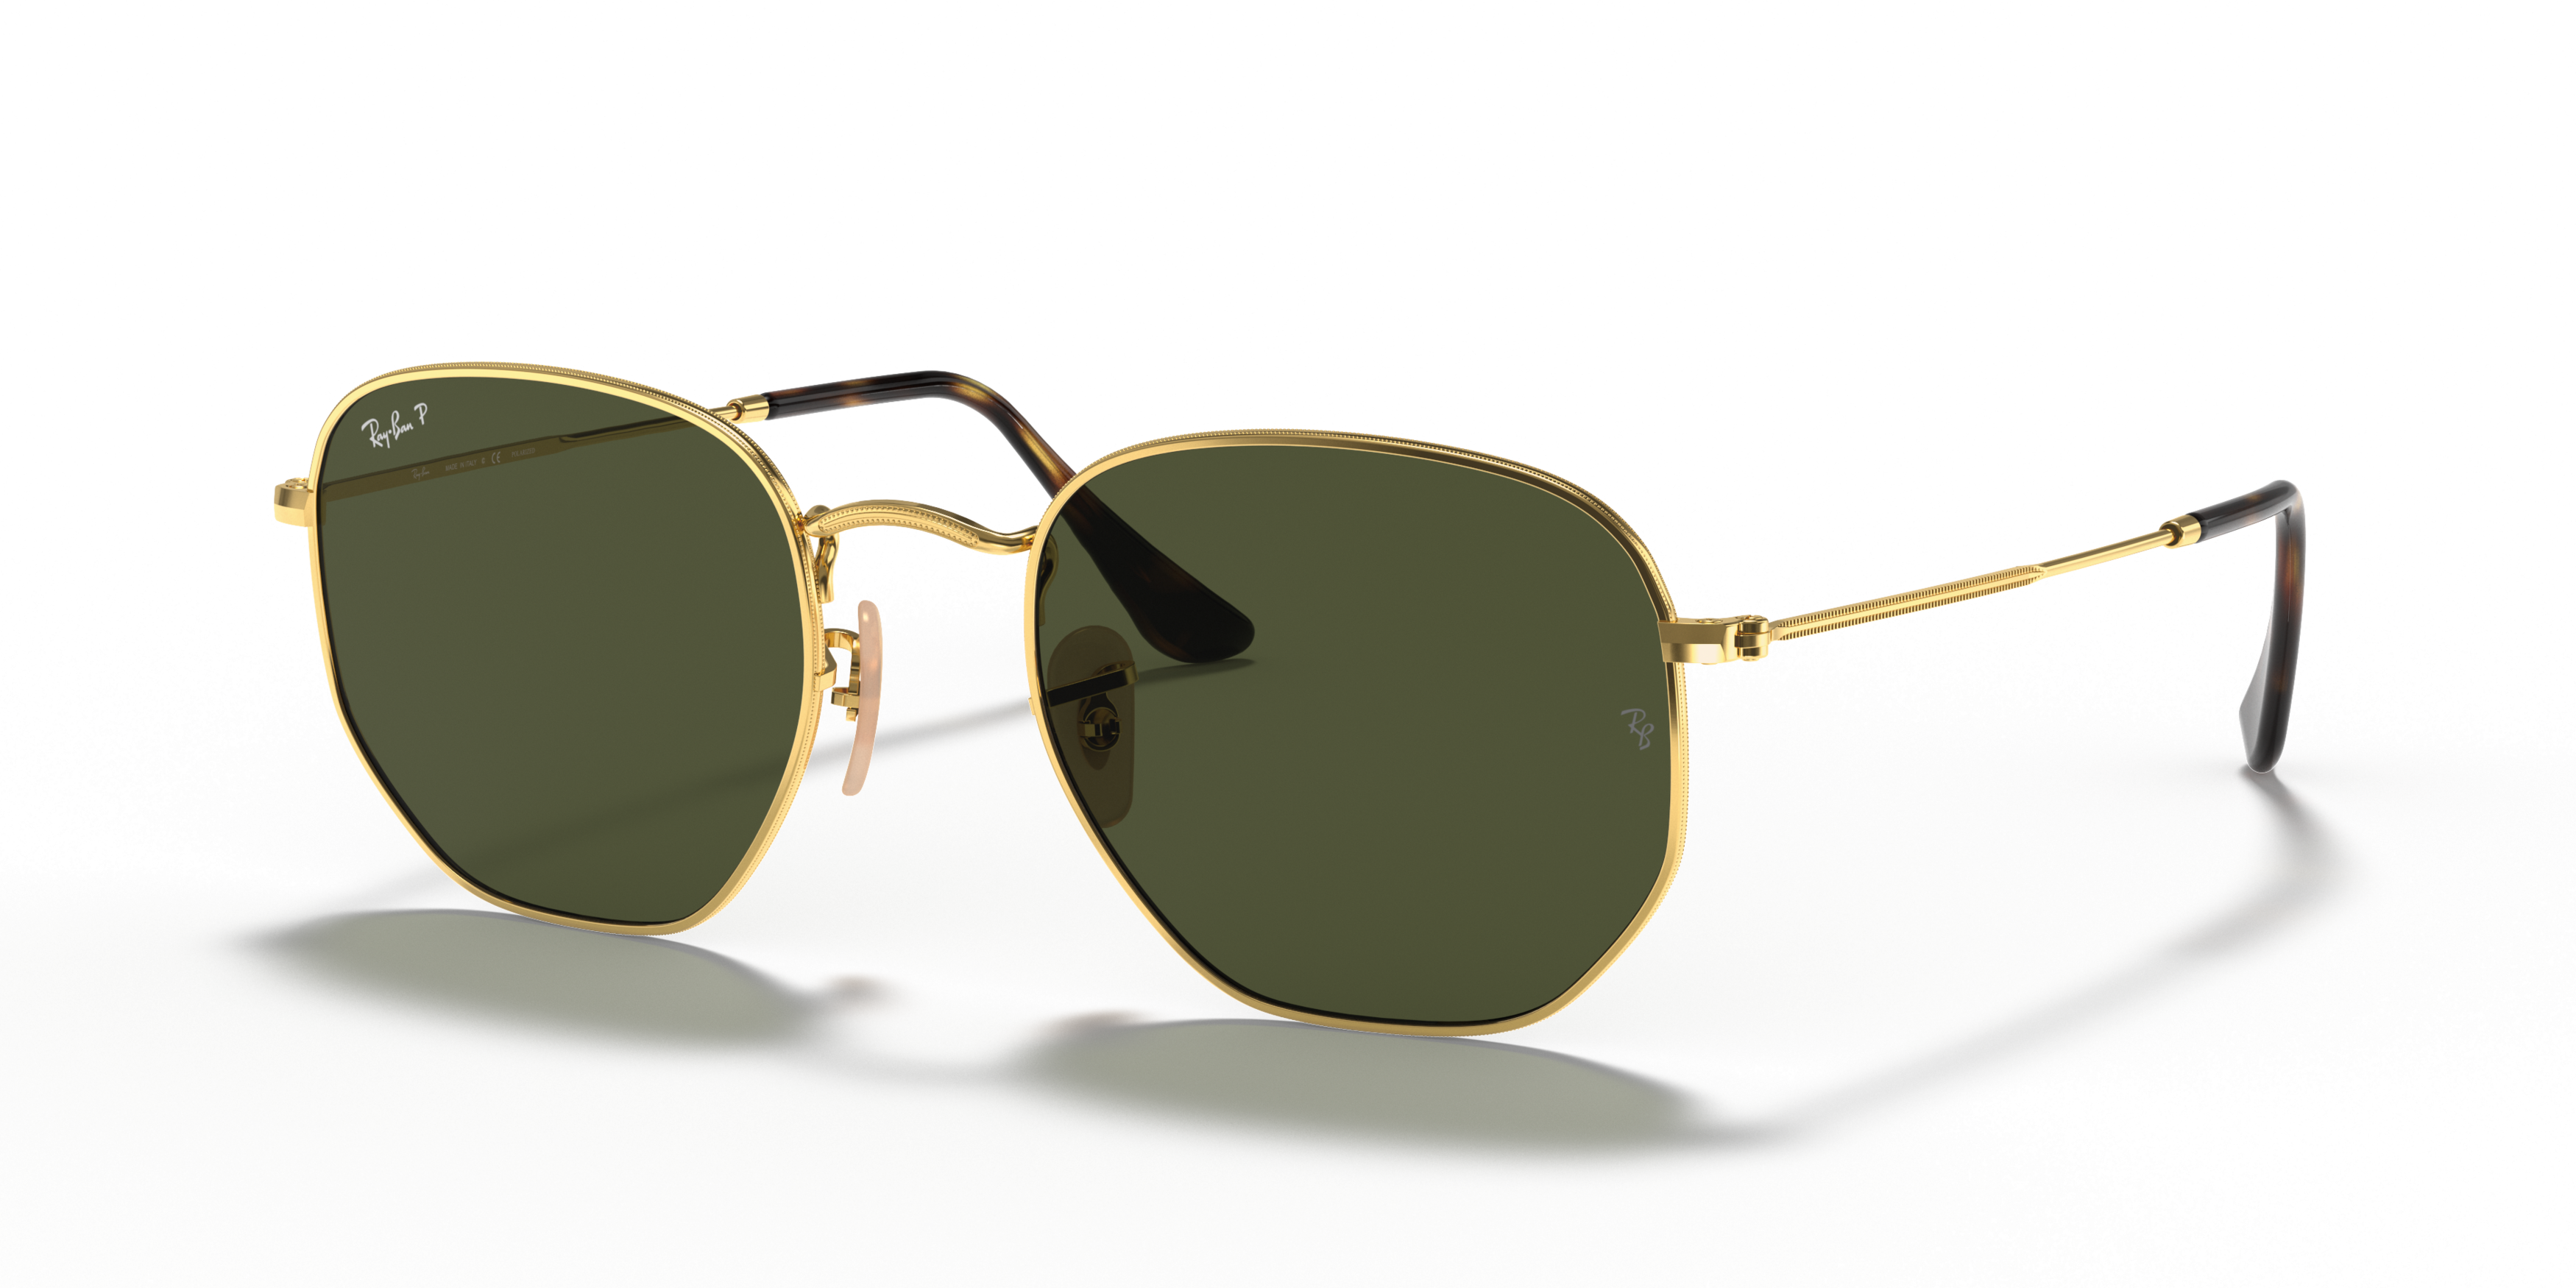 Angle_Left01 Ray-Ban Hexagonal RB 3548N (001/58) Sunglasses Green / Gold